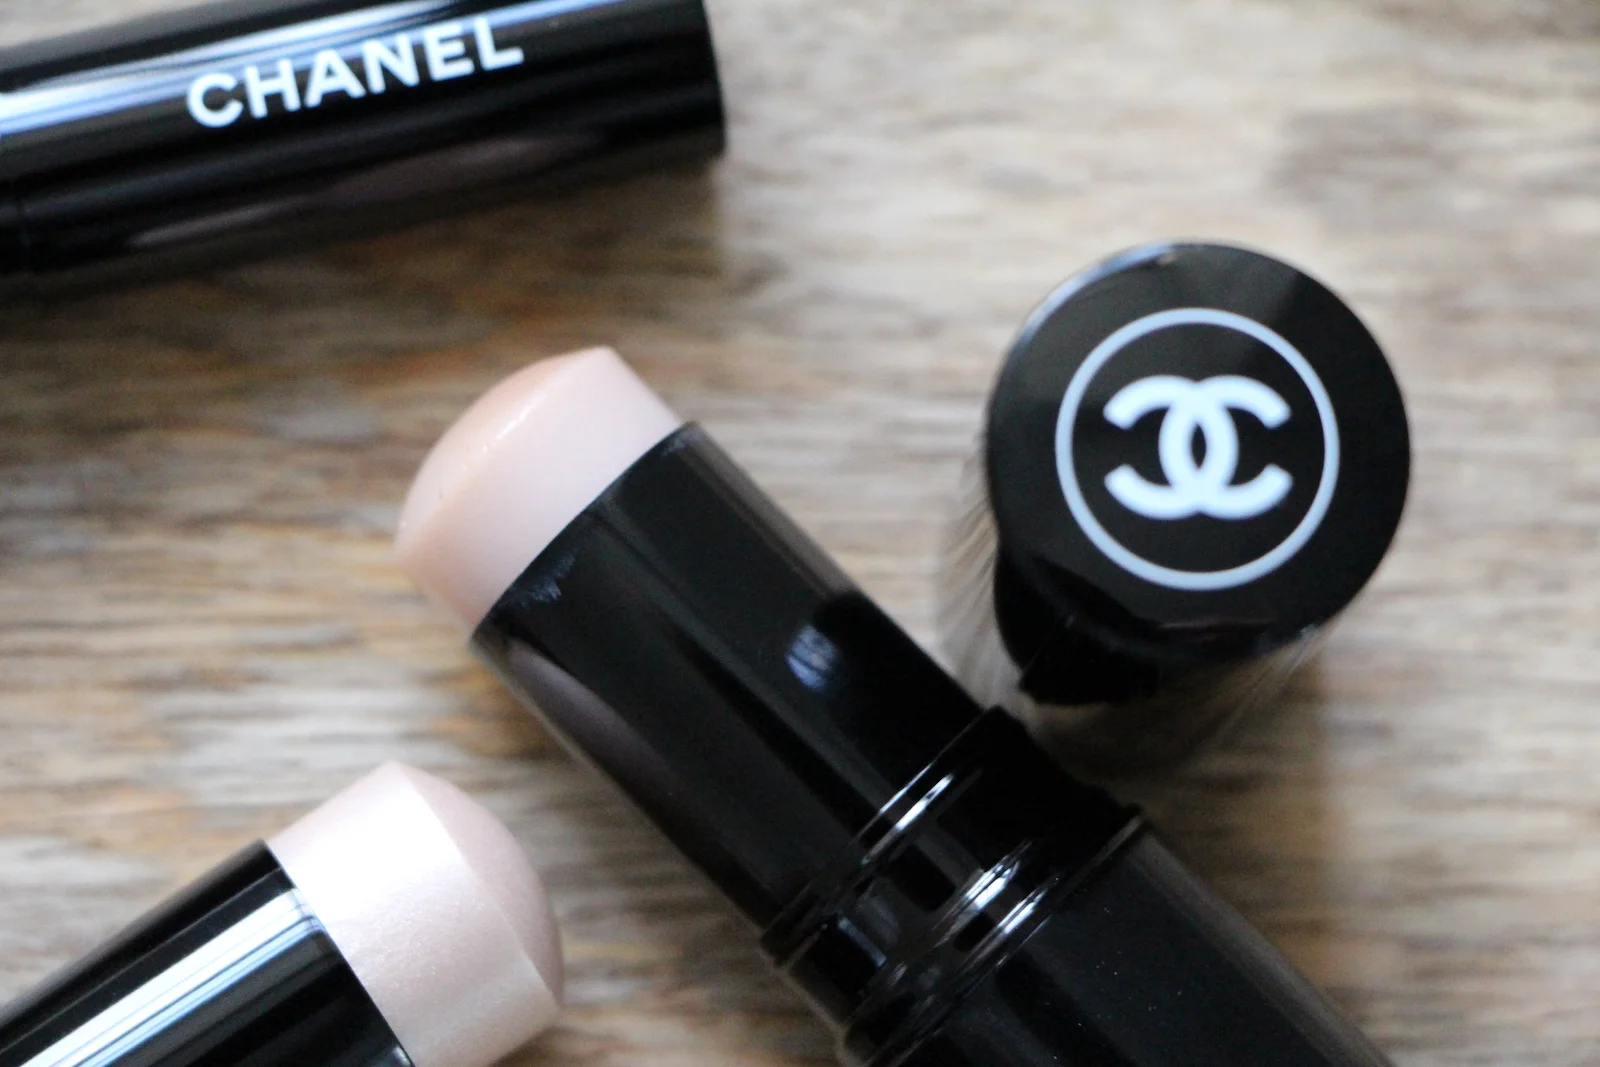 Chanel Baume Essentiel: The Luxury Low-Key Glow